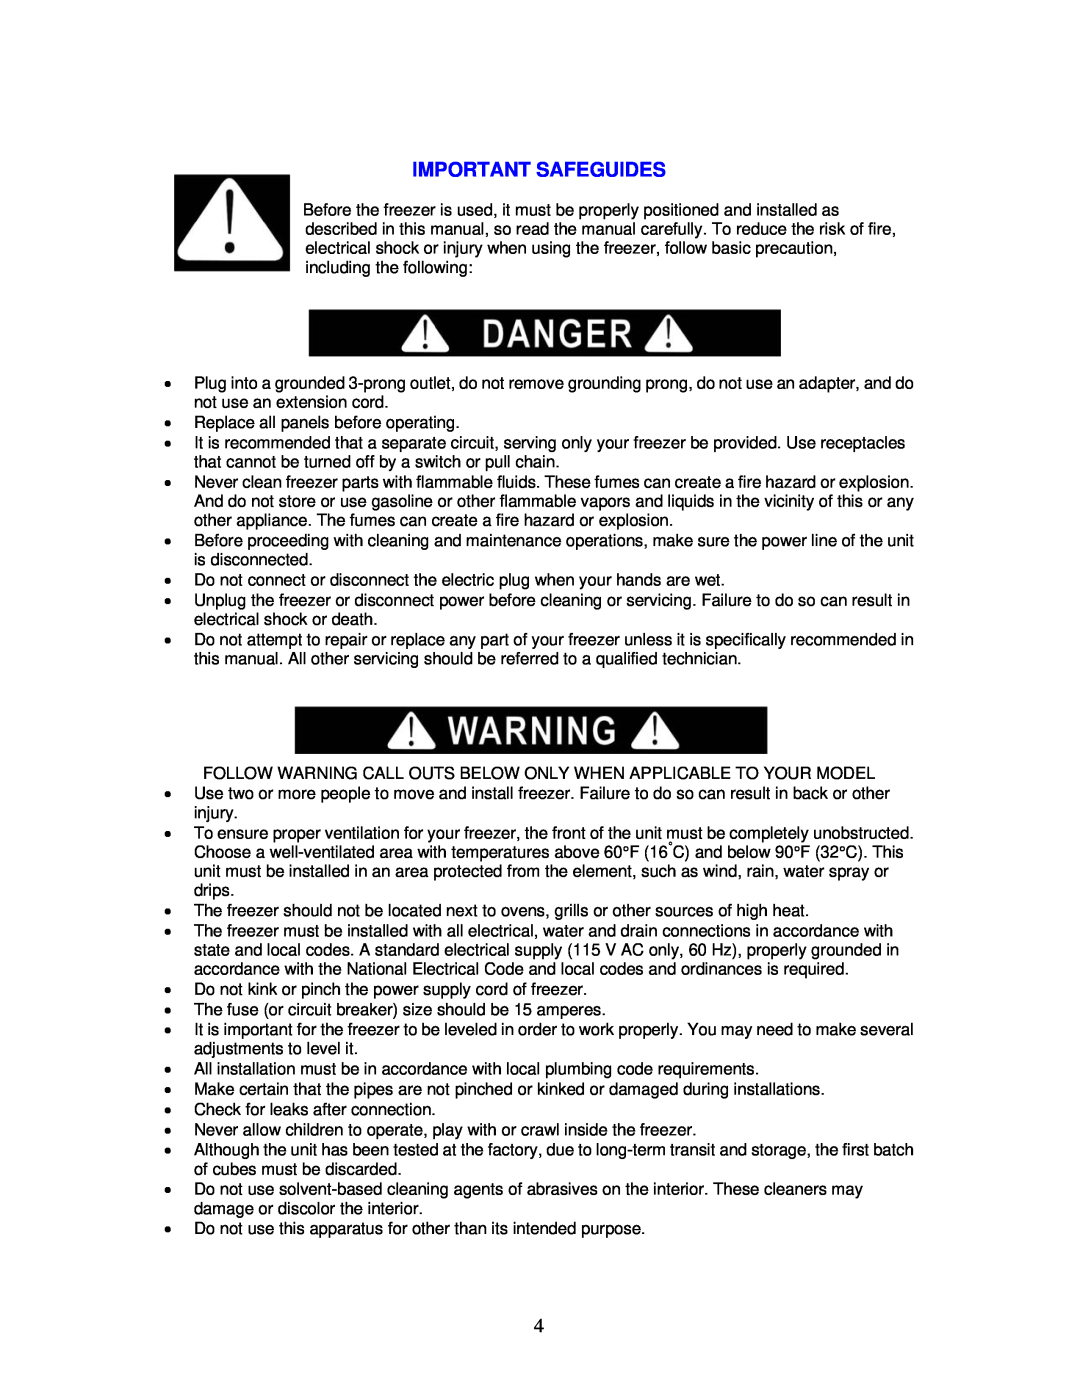 Avanti VM302W instruction manual Important Safeguides 